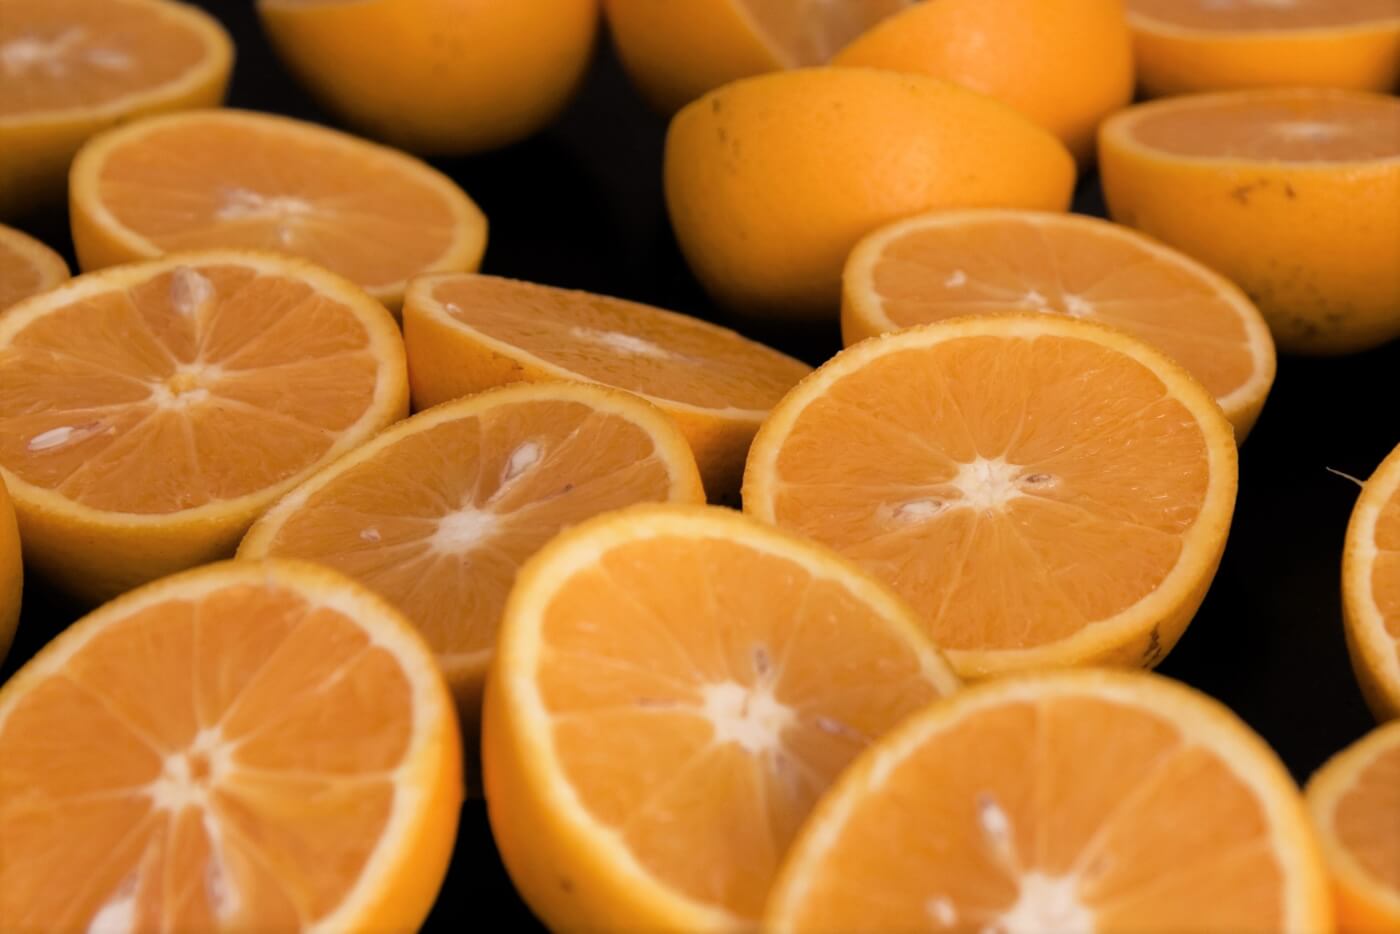 Ensalada de naranjas